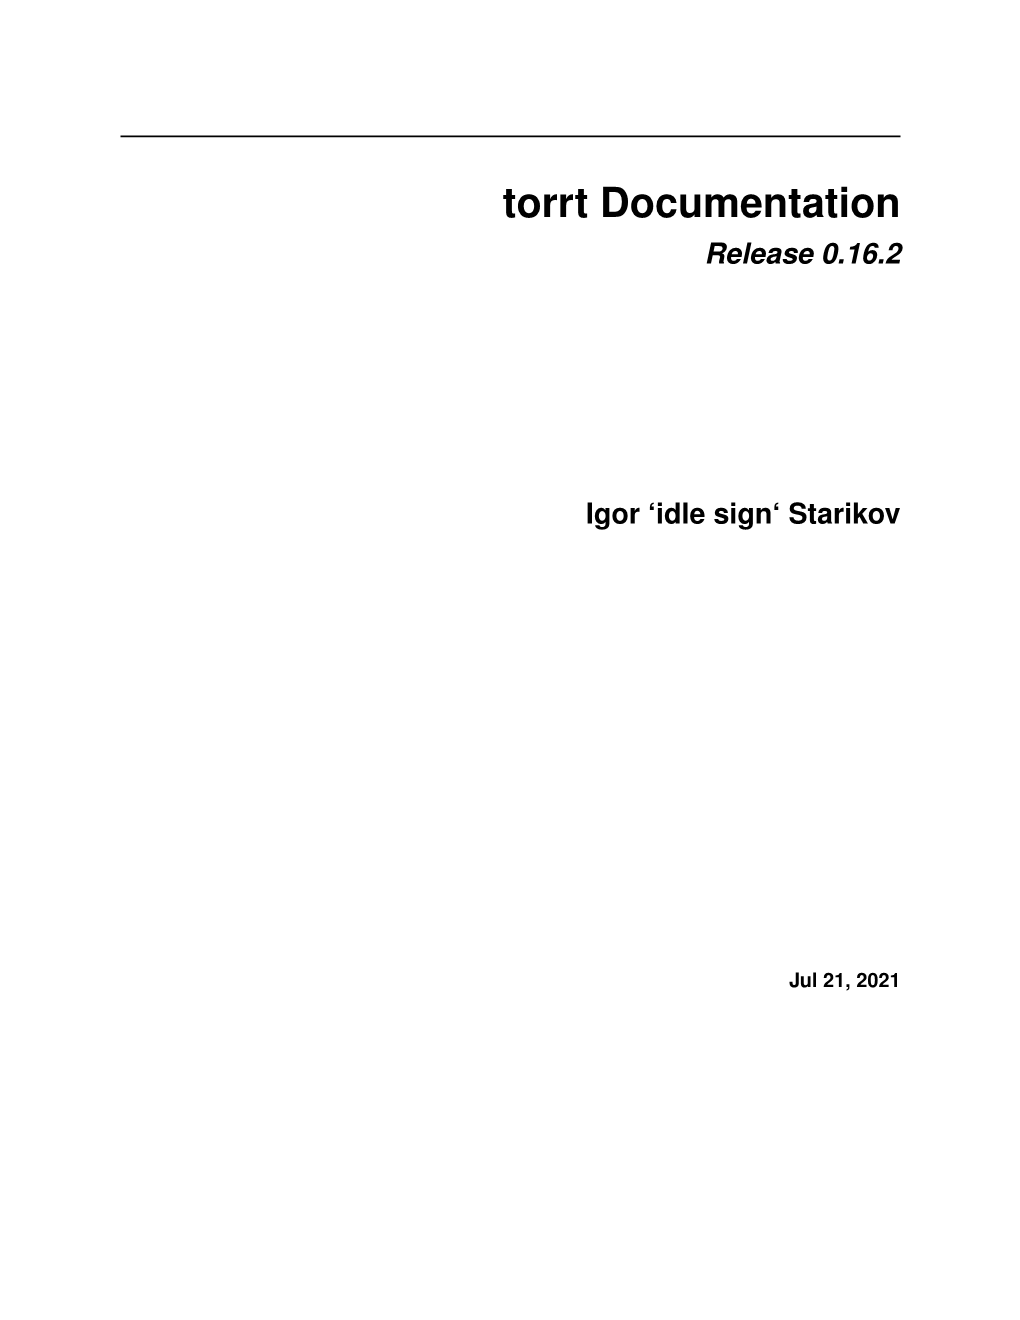 Torrt Documentation Release 0.16.2